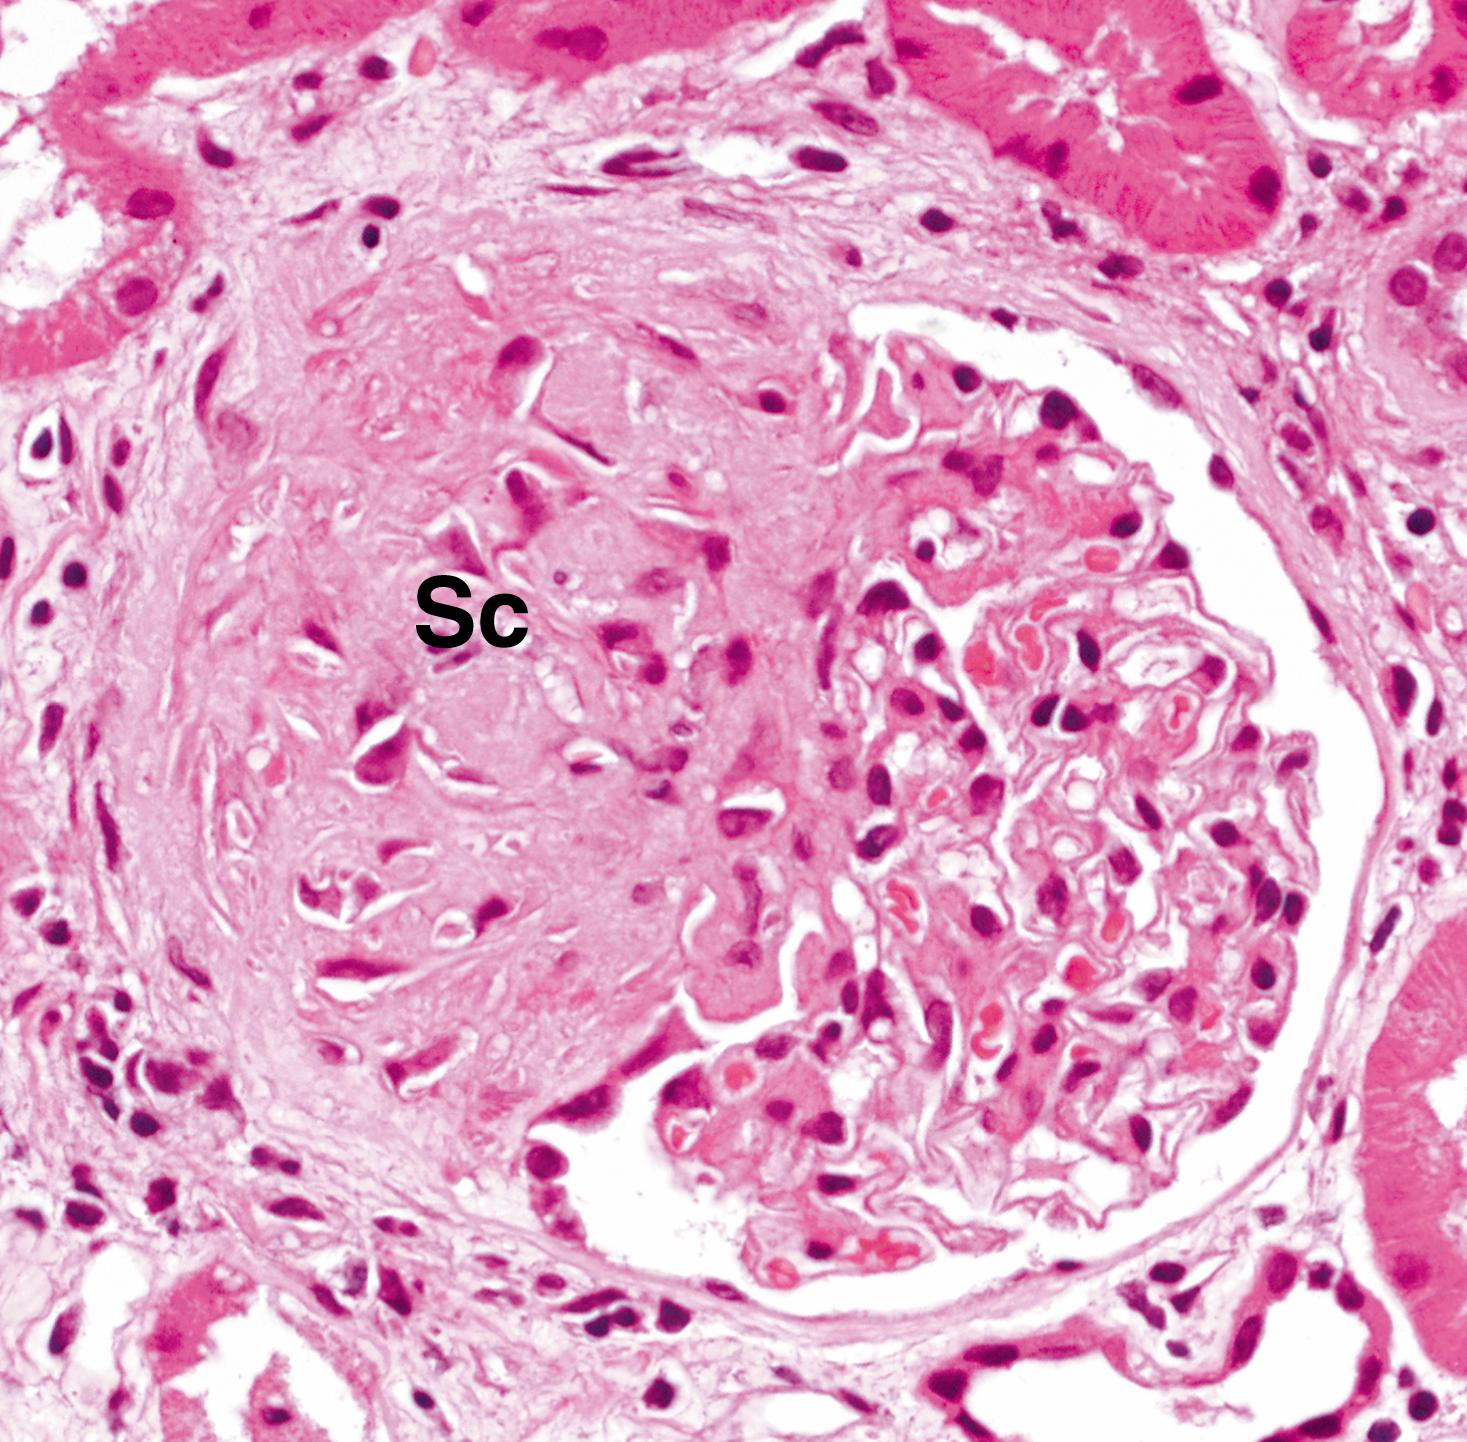 Fig. 15.7, Focal segmental glomerulosclerosis (HP).